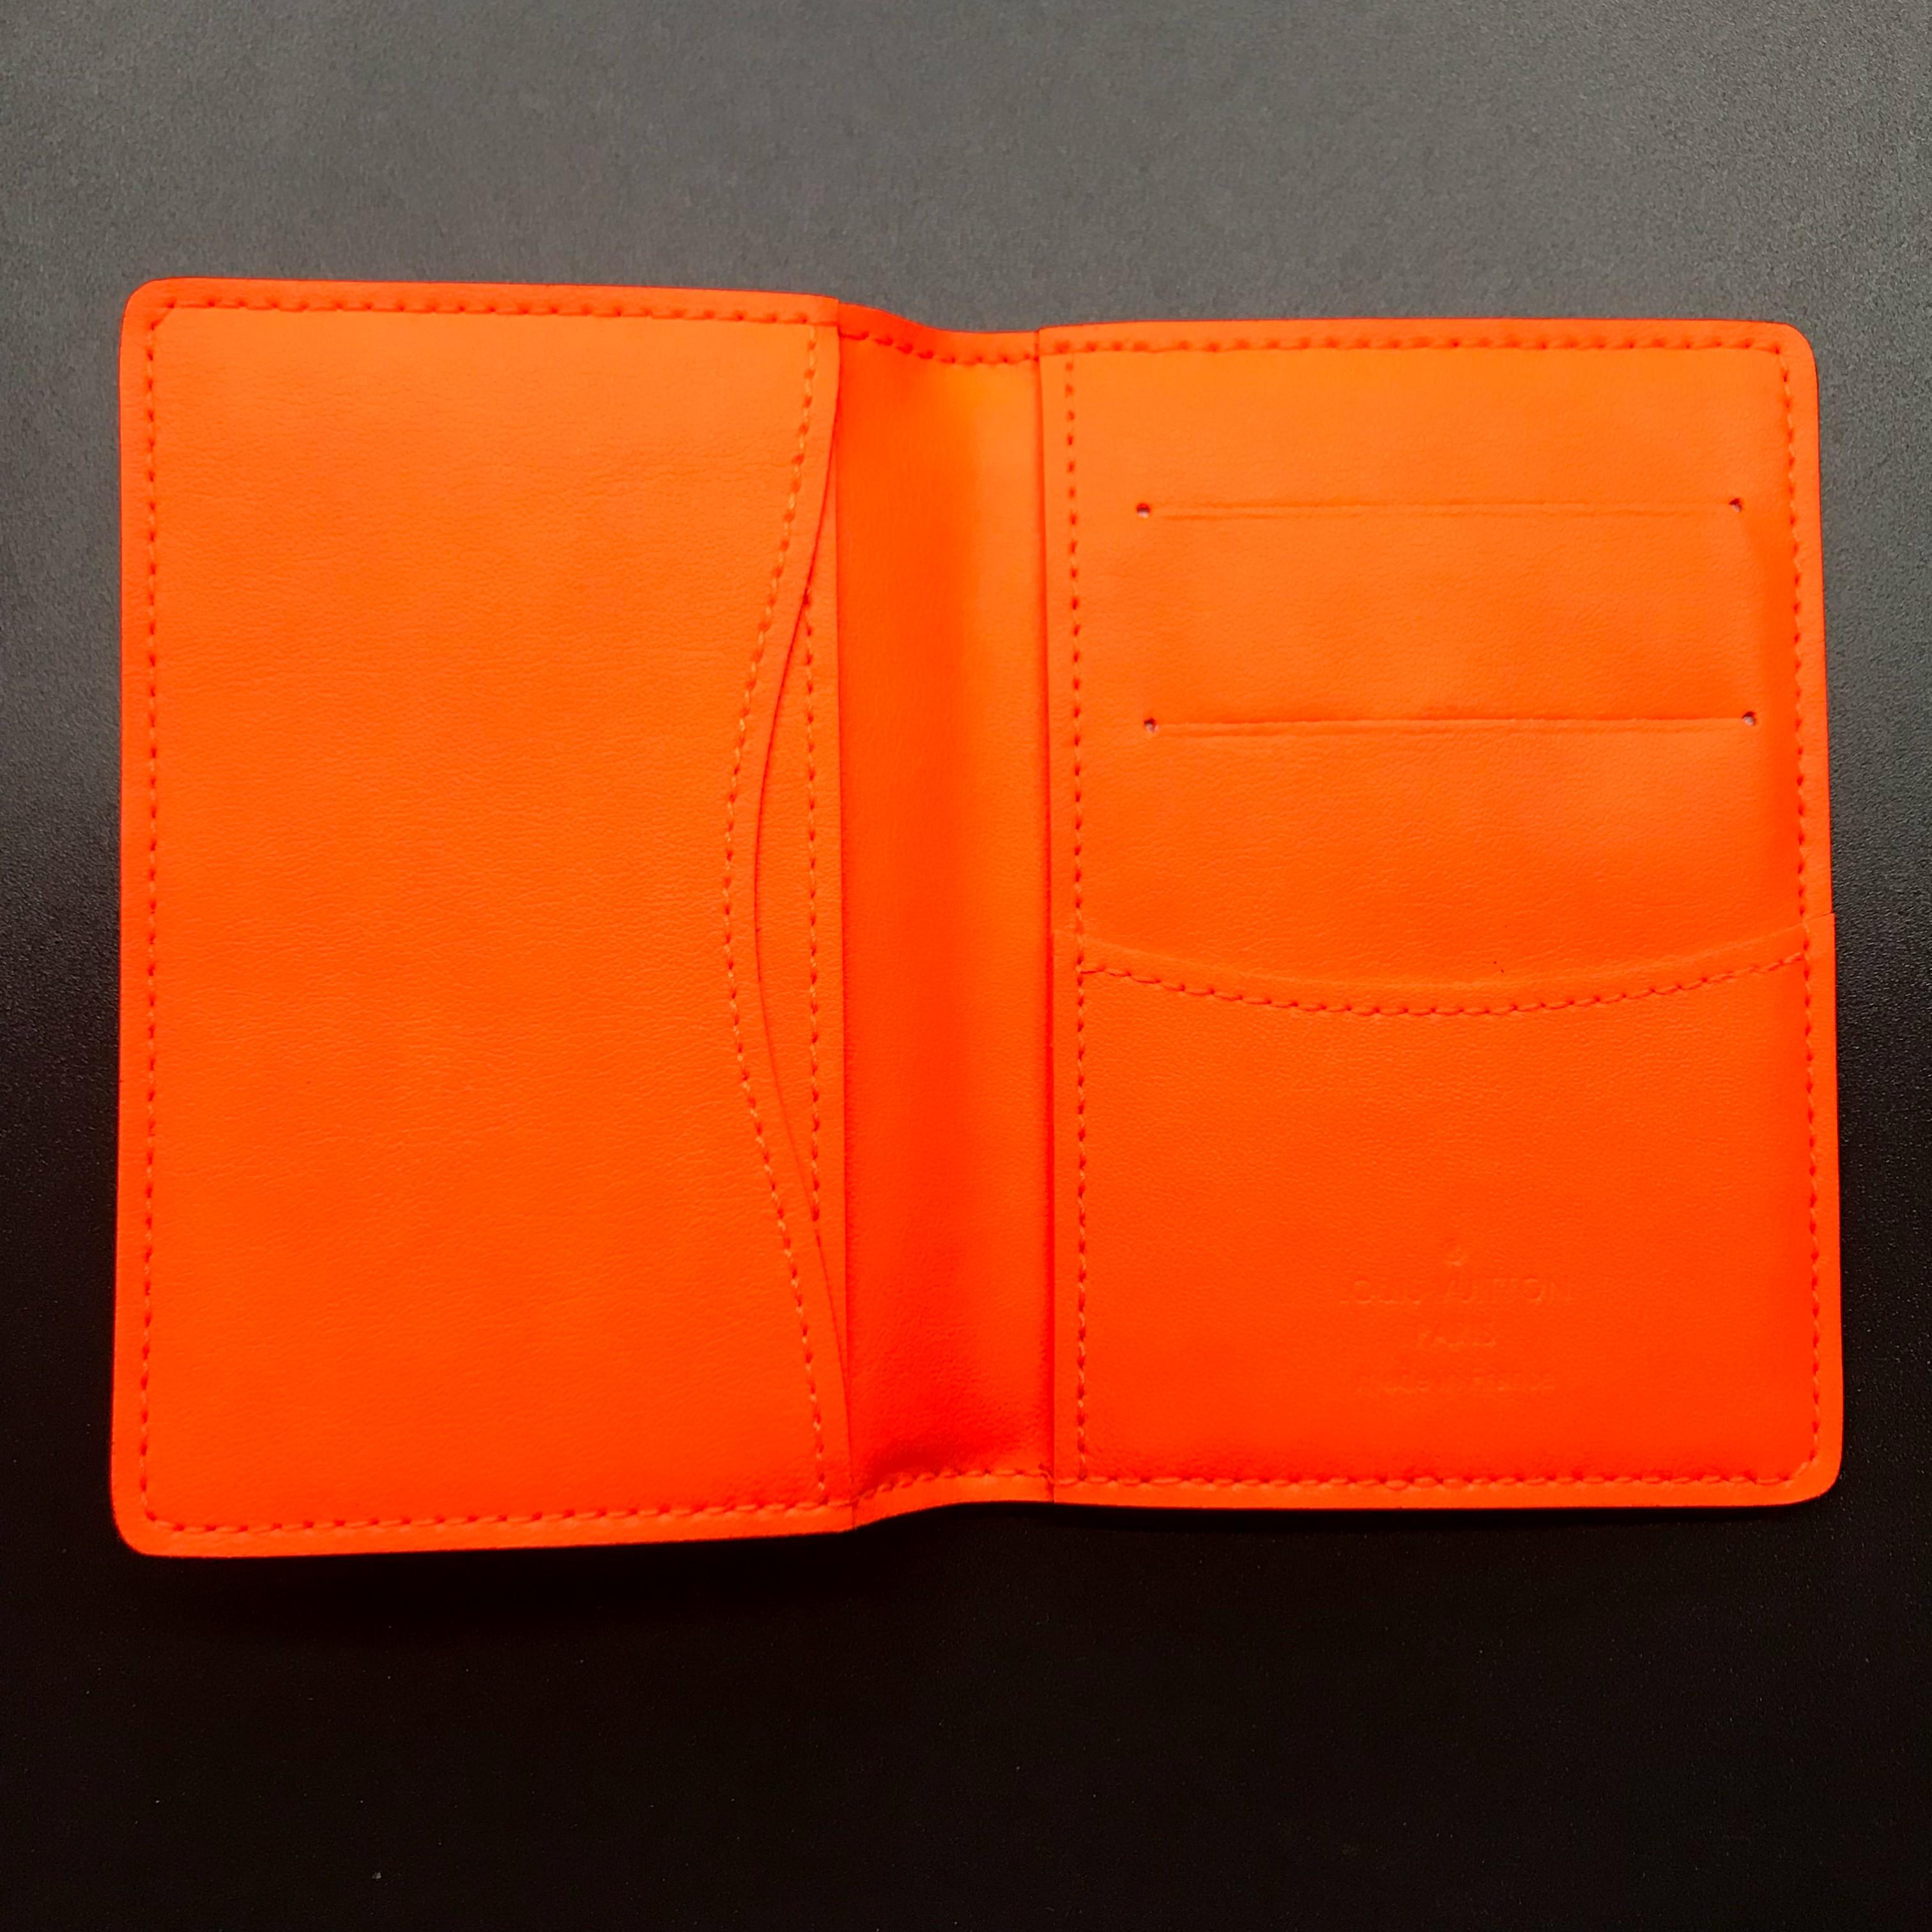 LOUIS VUITTON Neon Damier Infini Pocket Organizer Orange 863774